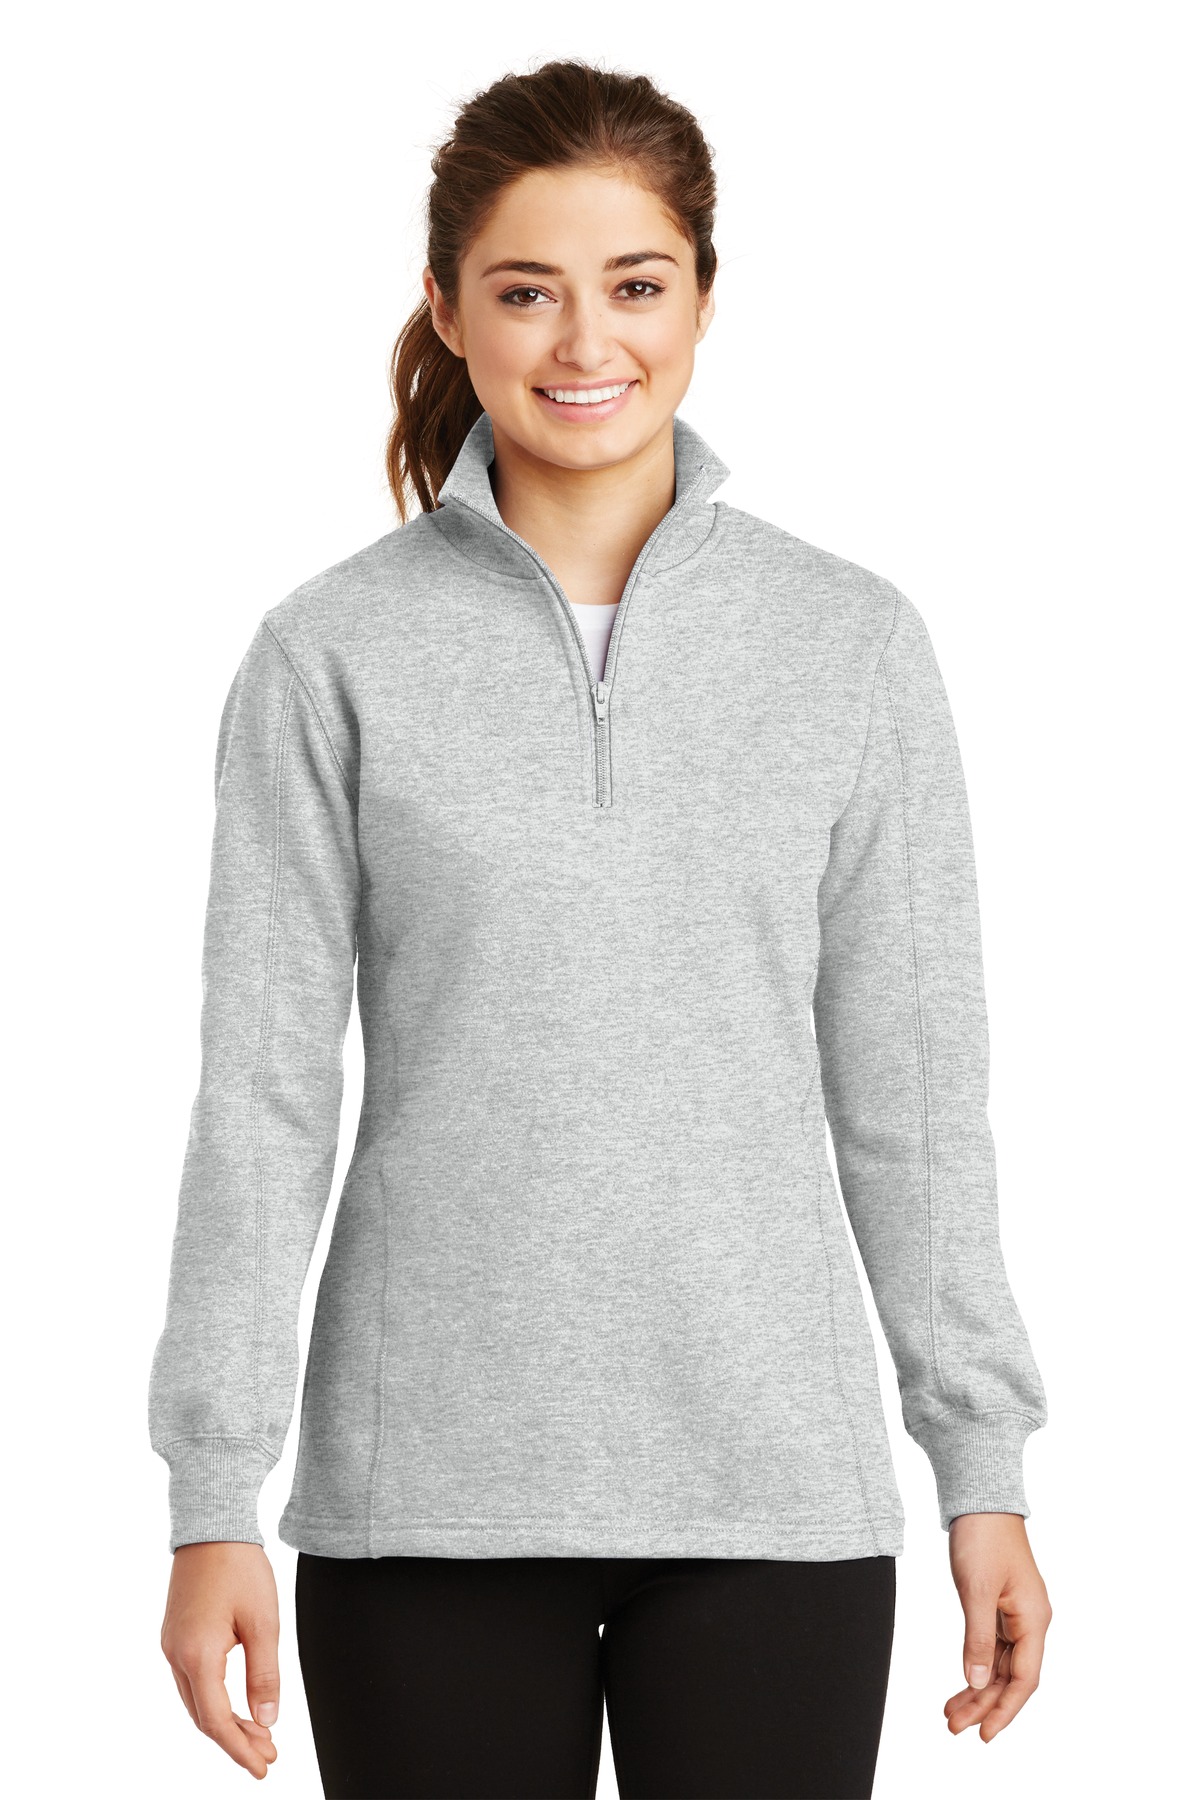 Mrat Sweatshirt for Women UK Clearance 3/4 Sleeve Tops Color Block